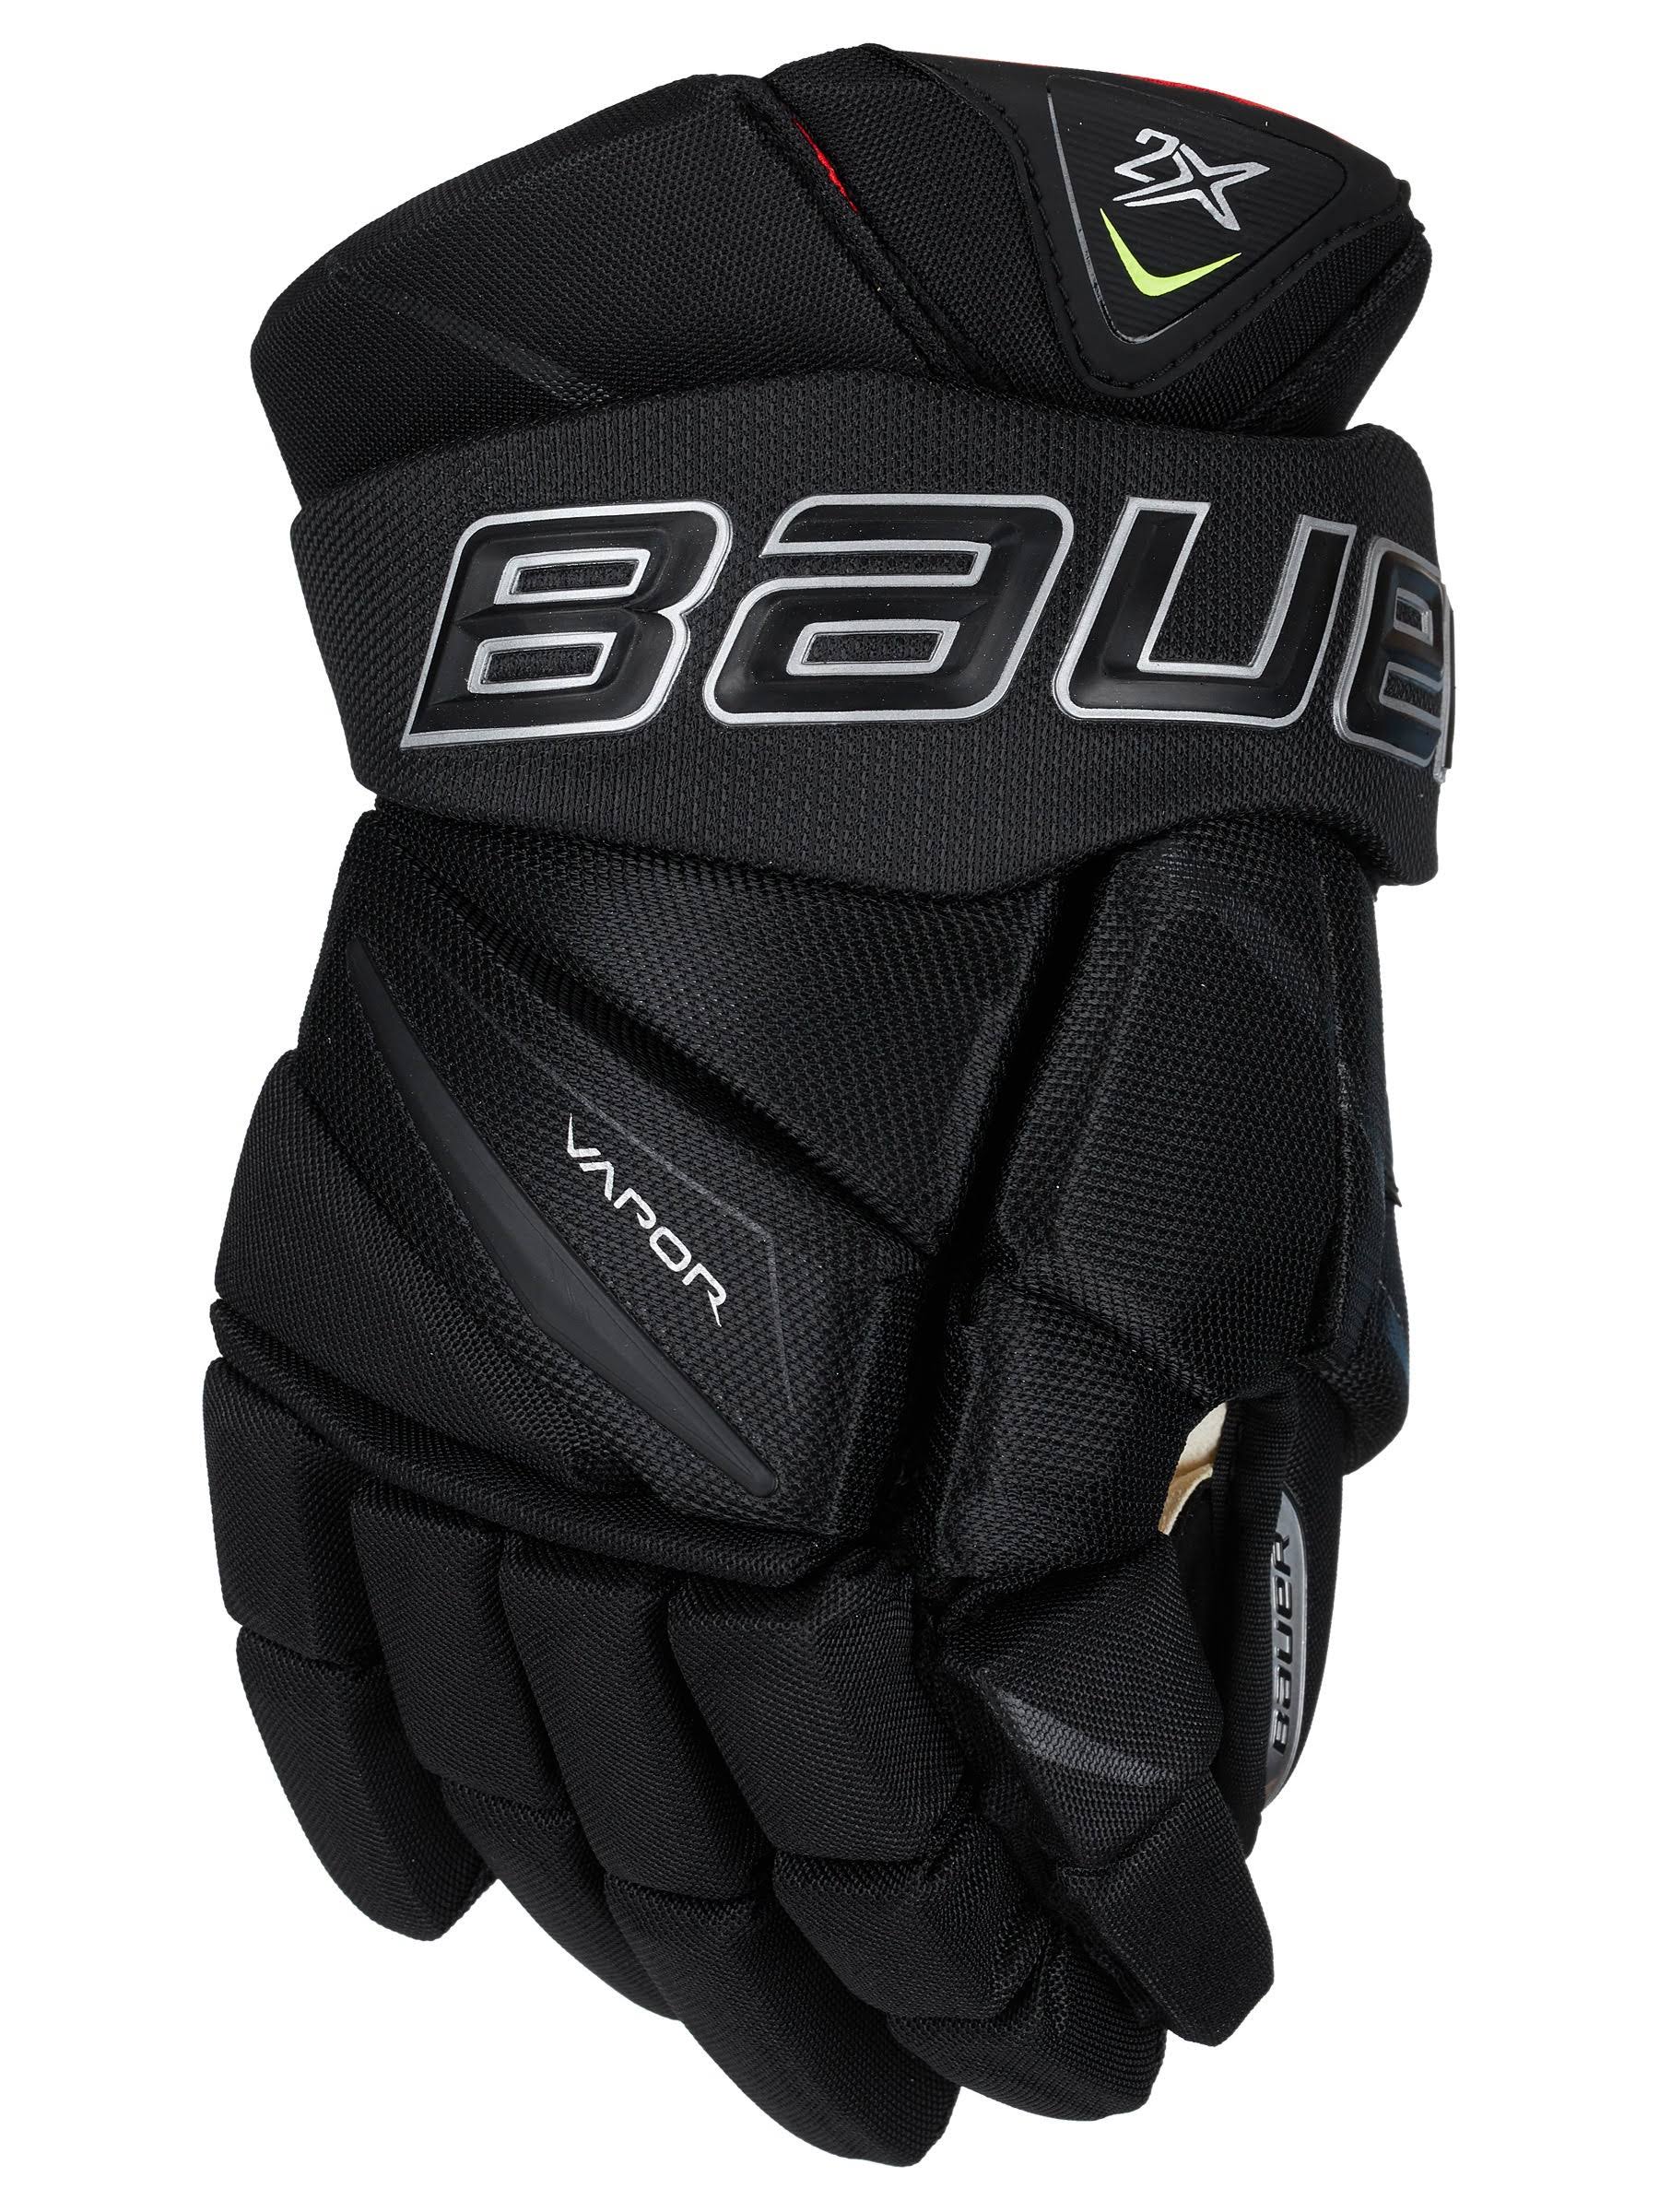 Bauer Vapor 2x Hockey Gloves - Senior - Black - 14.0"